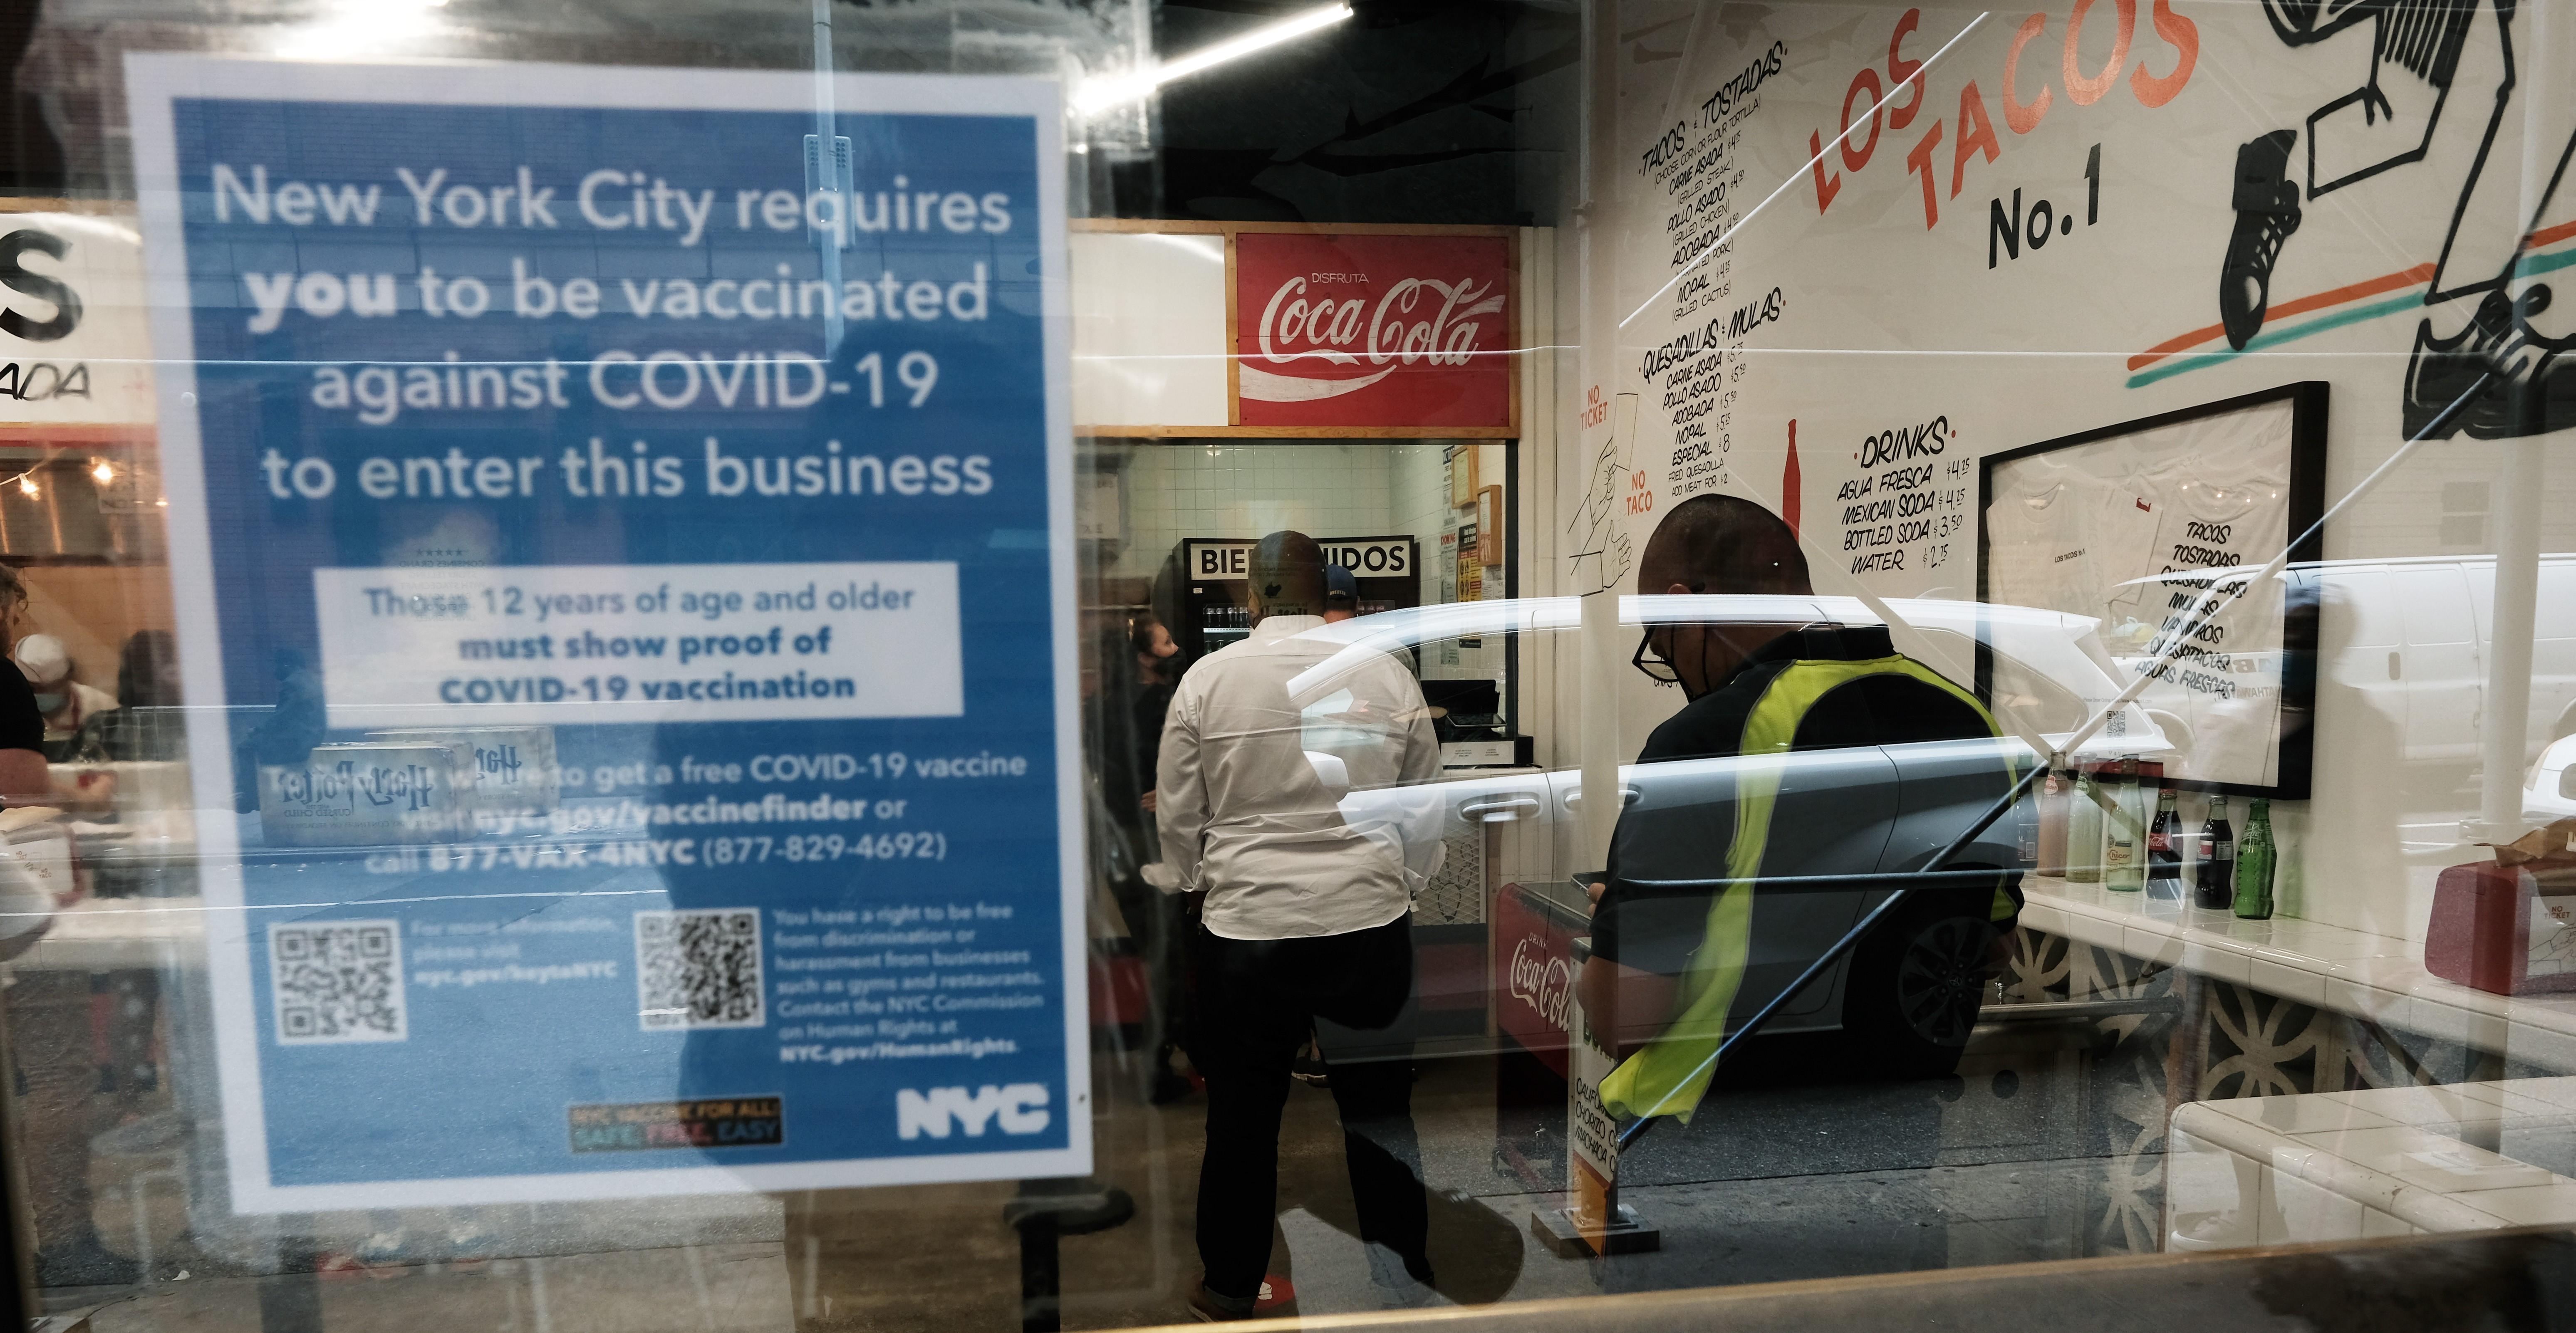 Vaccine mandate sign in New York City restaurant